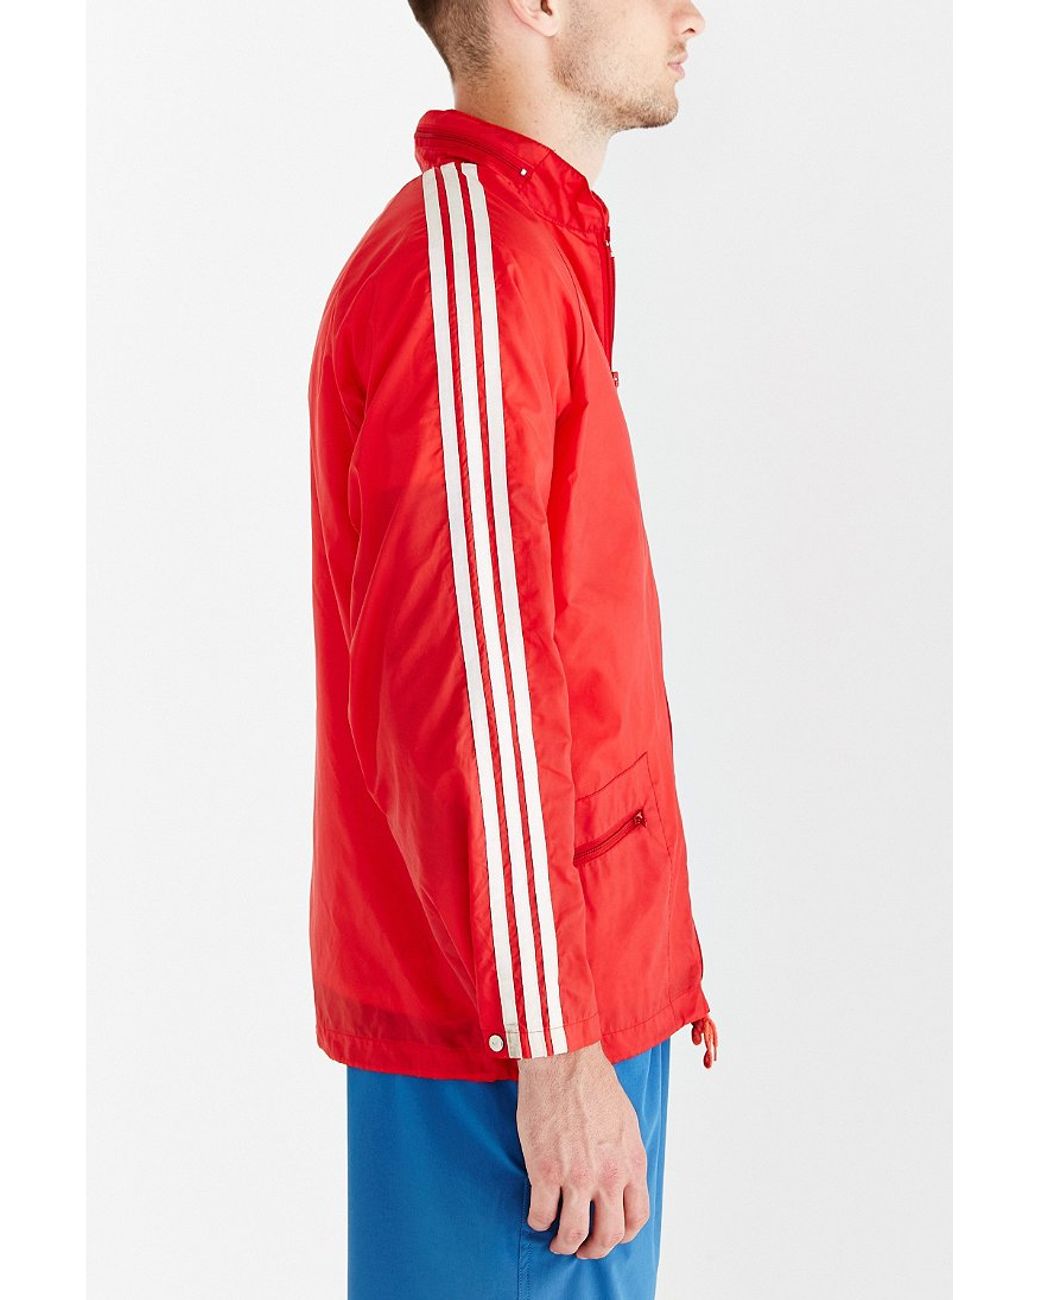 Especificado Capilares articulo Without Walls Vintage Adidas Windbreaker Jacket in Red for Men | Lyst